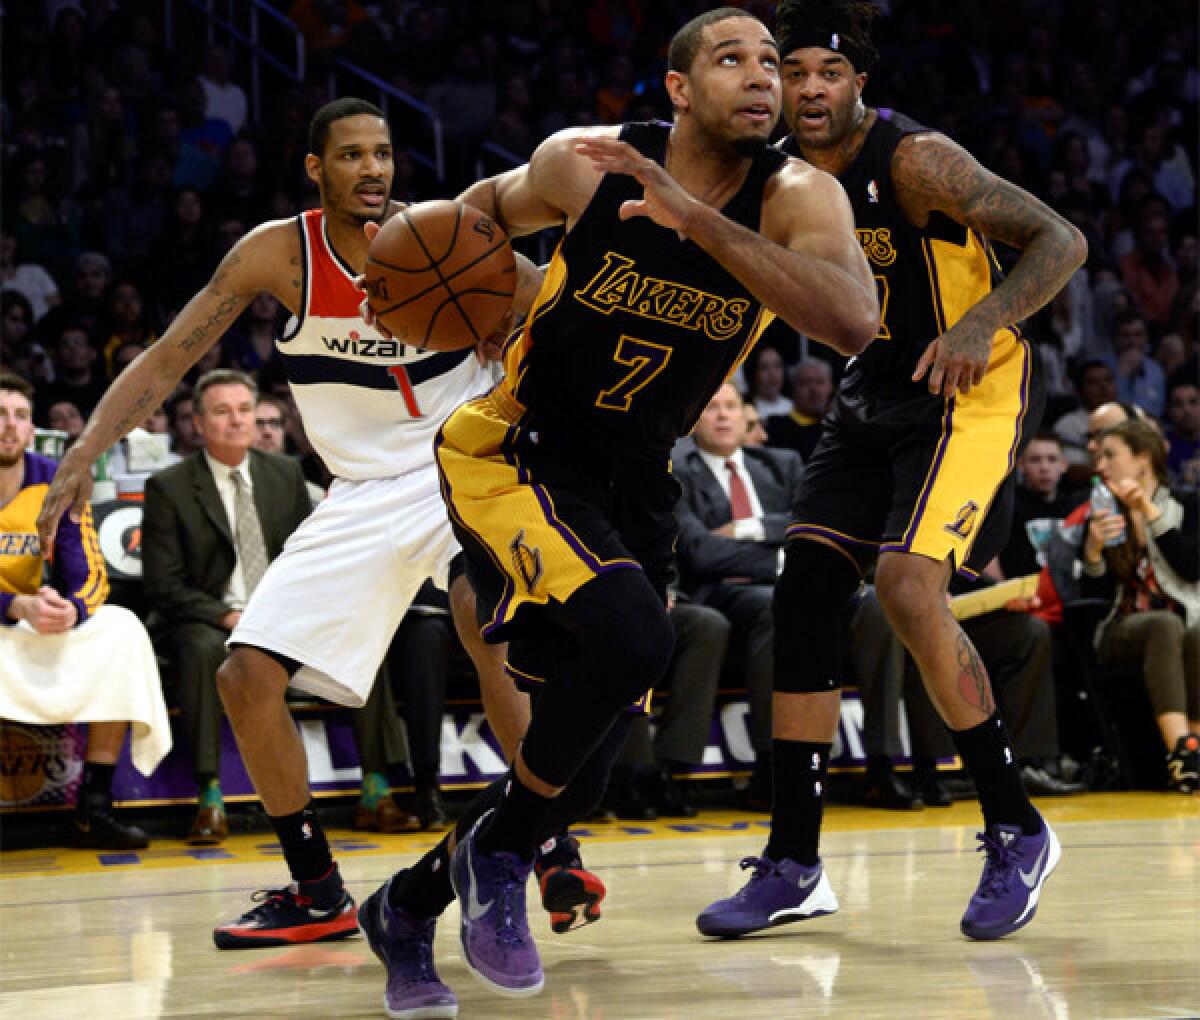 Xavier Henry gets by Washington's Trevor Ariza as Lakers teammate Jordan Hill looks on.